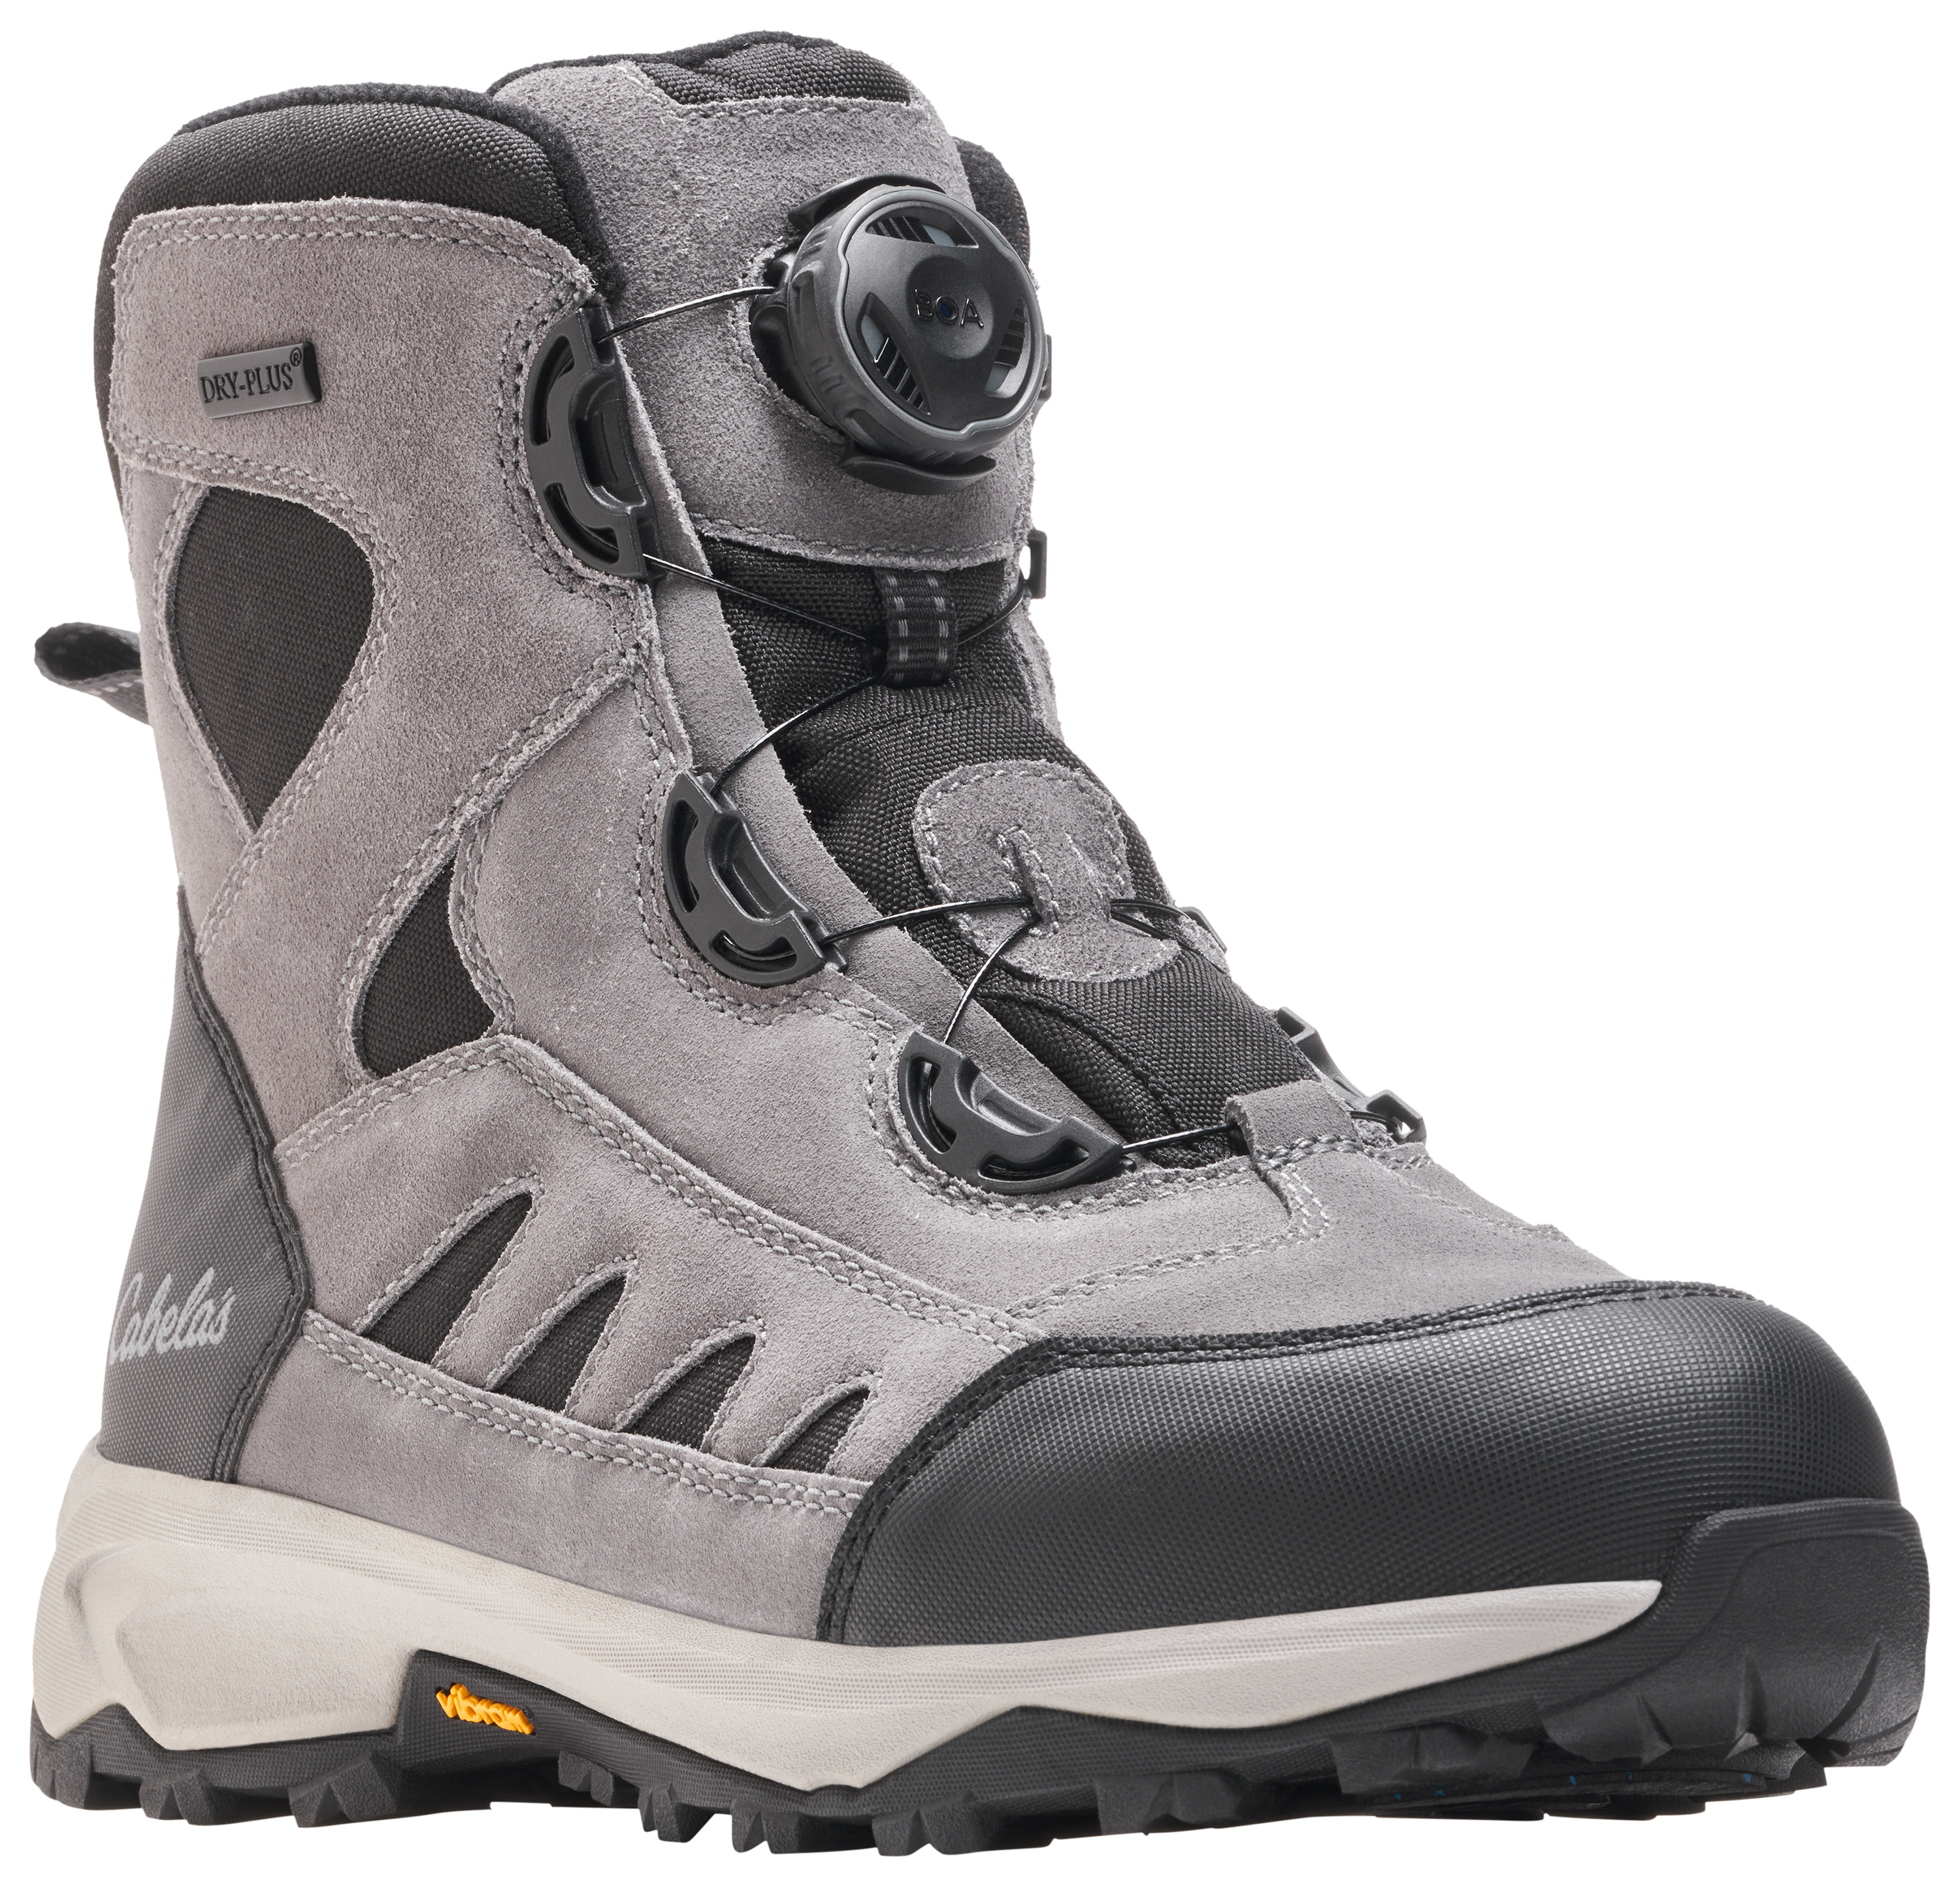 Cabela's Snow Runner Max 2.0 BOA Insulated Waterproof Winter Boots for Men - Granite Gray - 9M